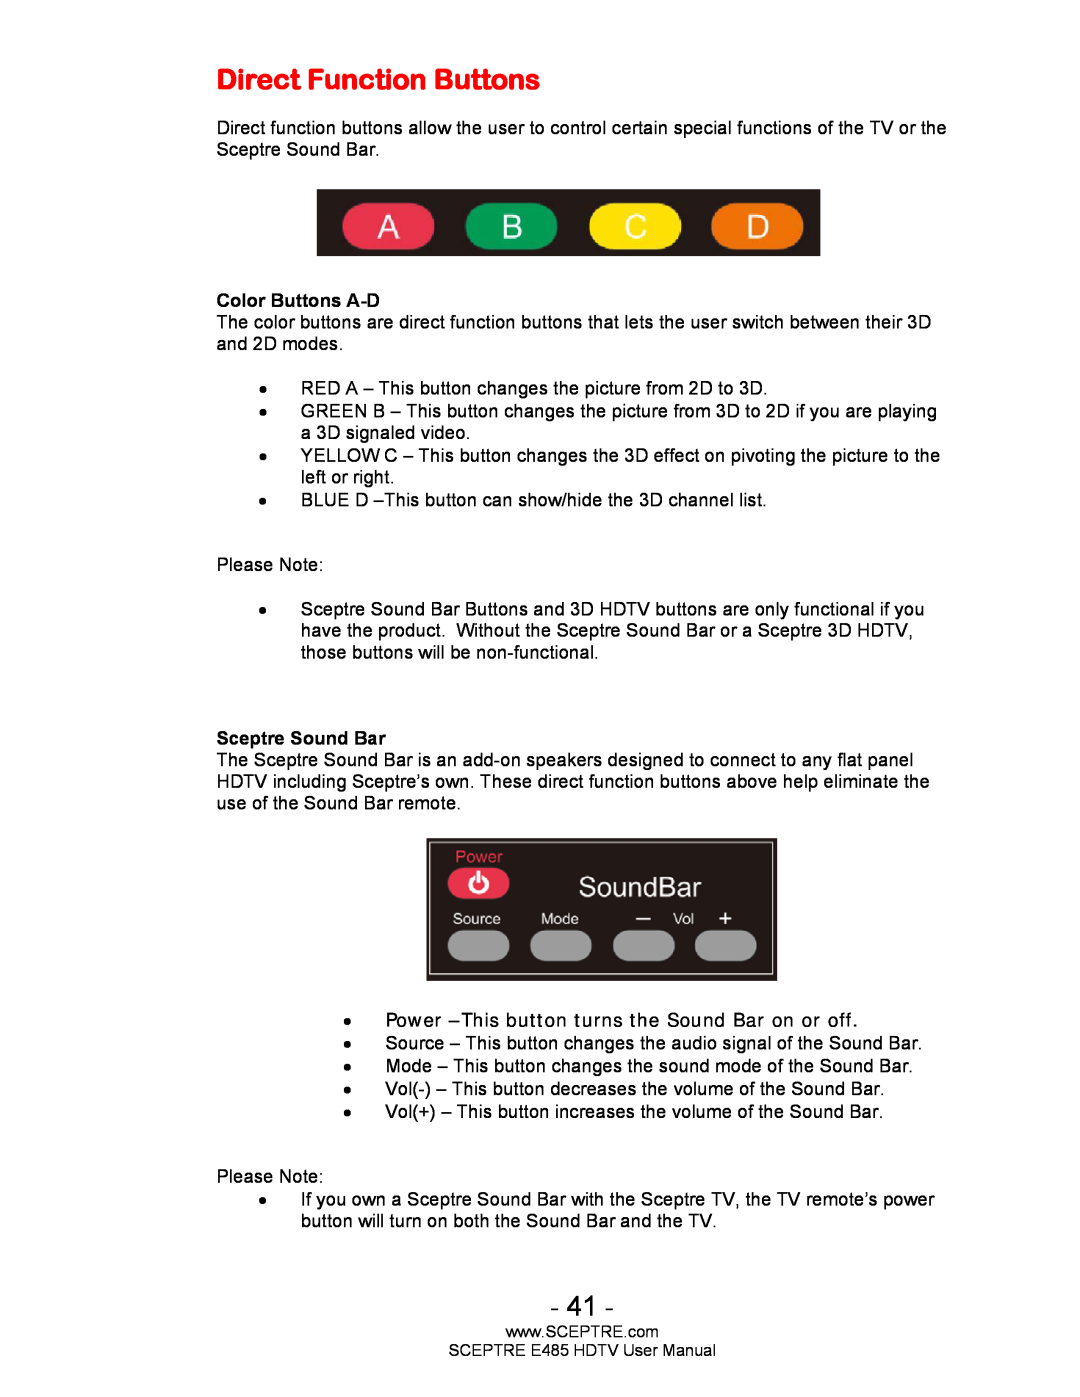 Sceptre Technologies E485 user manual Direct Function Buttons, Color Buttons A-D, Sceptre Sound Bar 